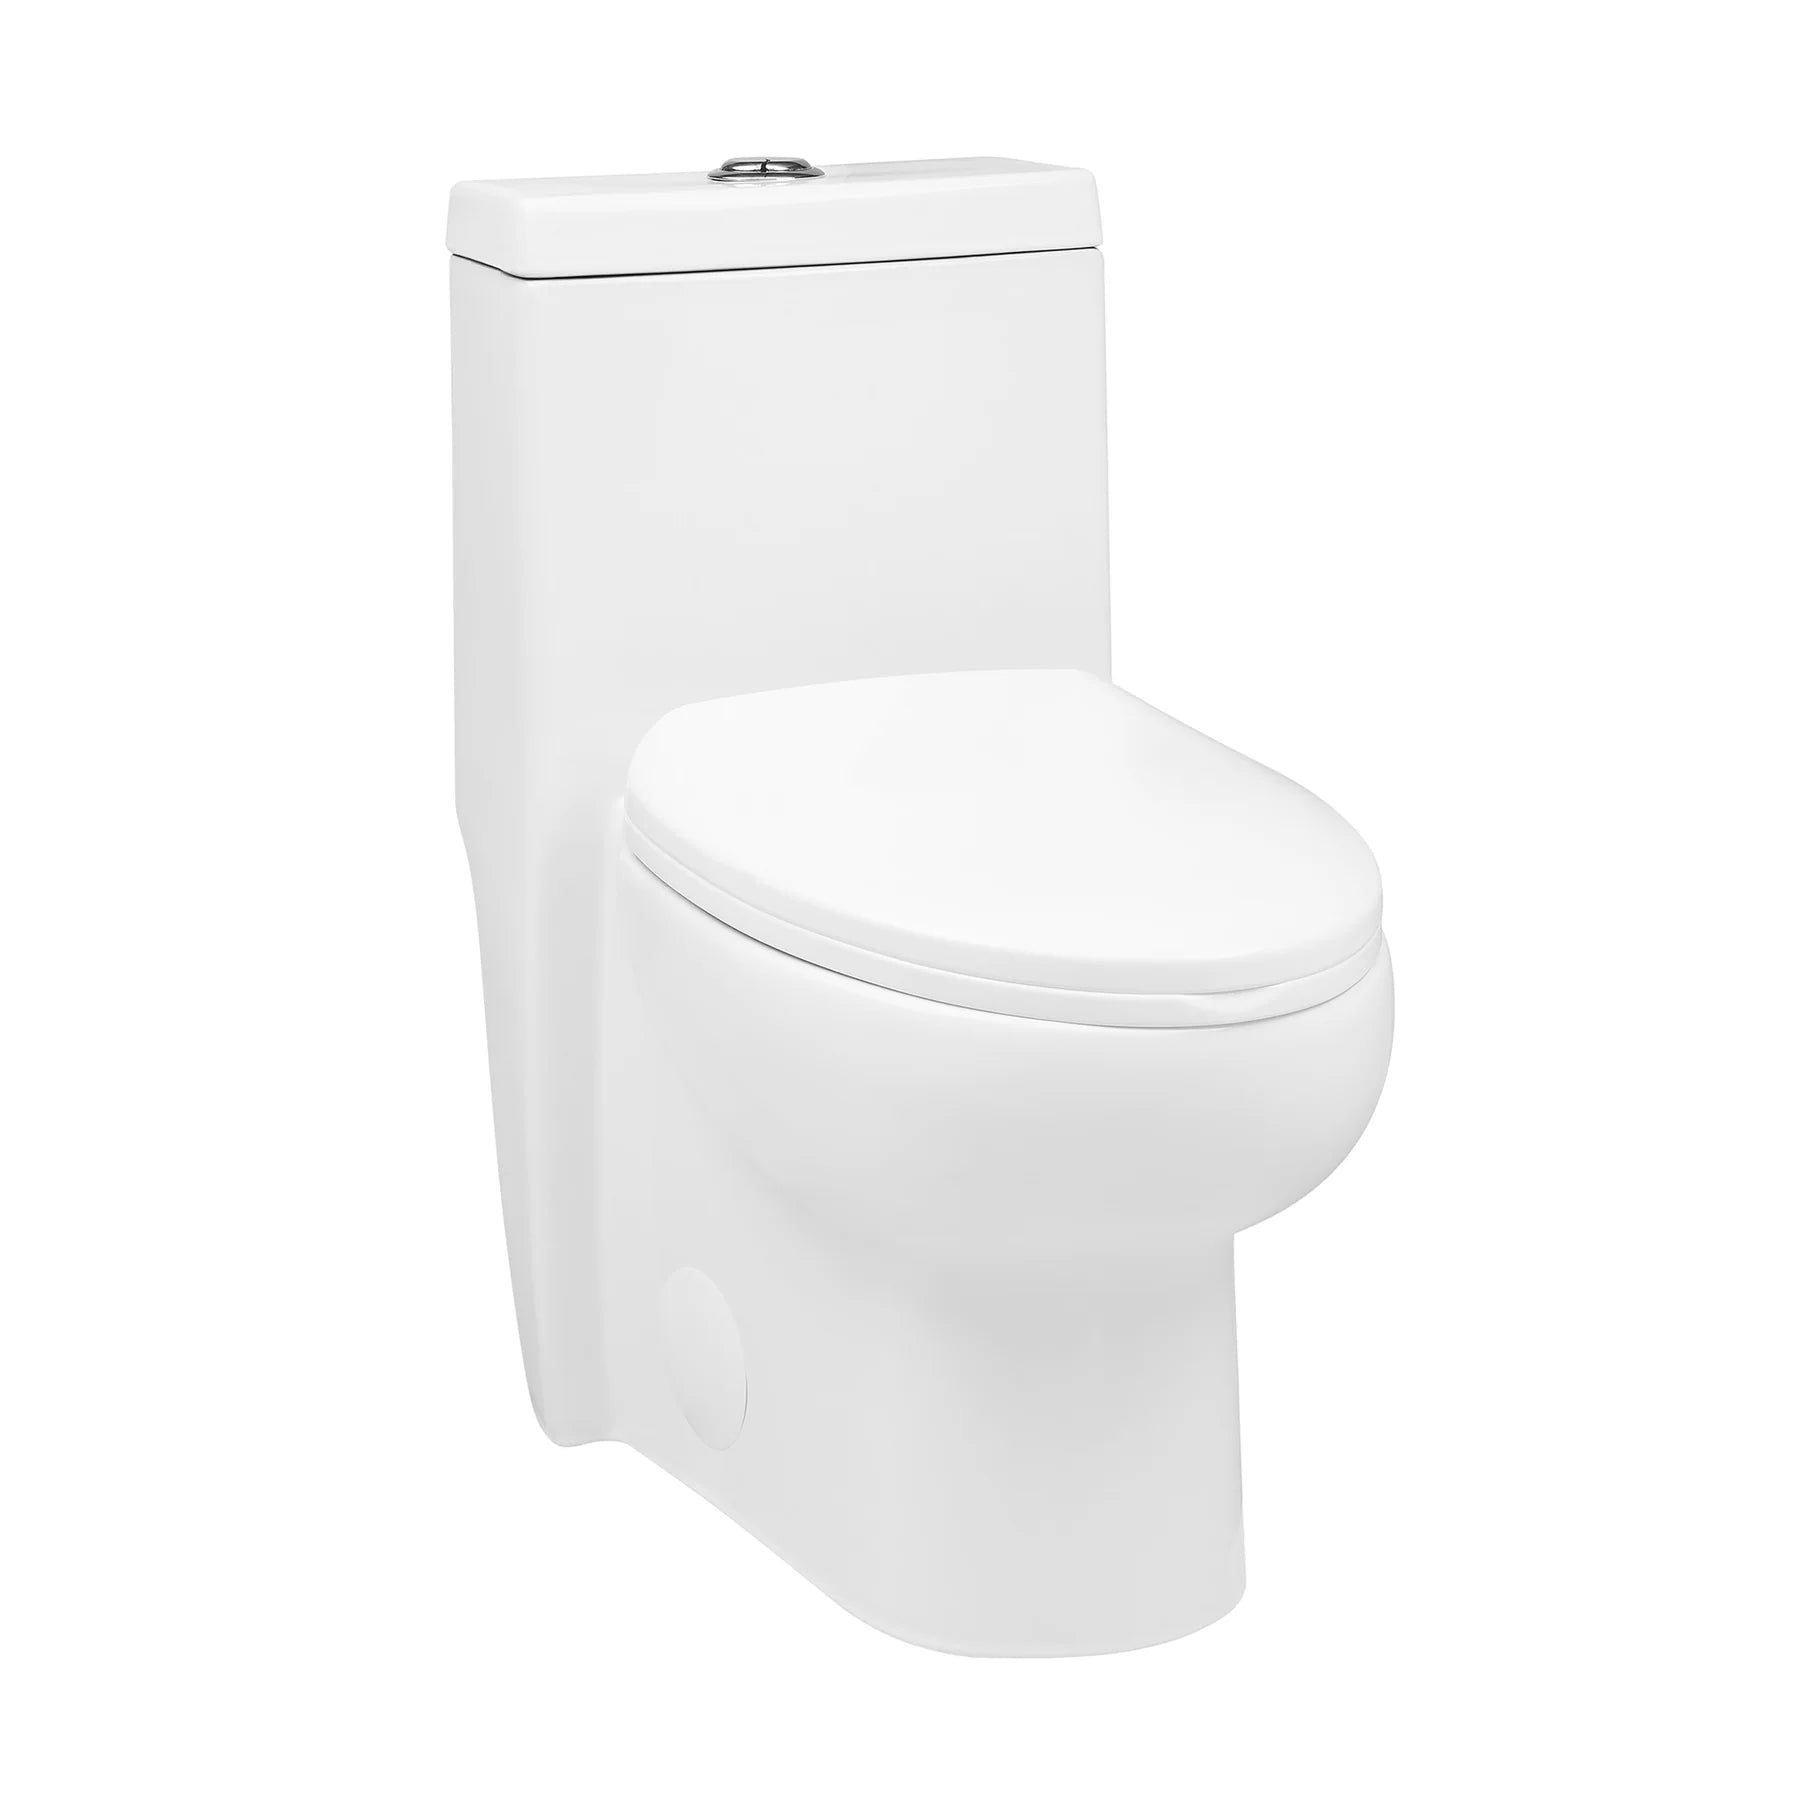 Swiss Madison Soleil One-Piece Elongated Toilet Gravity Dual-Flush 1.1/1.6 gpf - SM-1T210